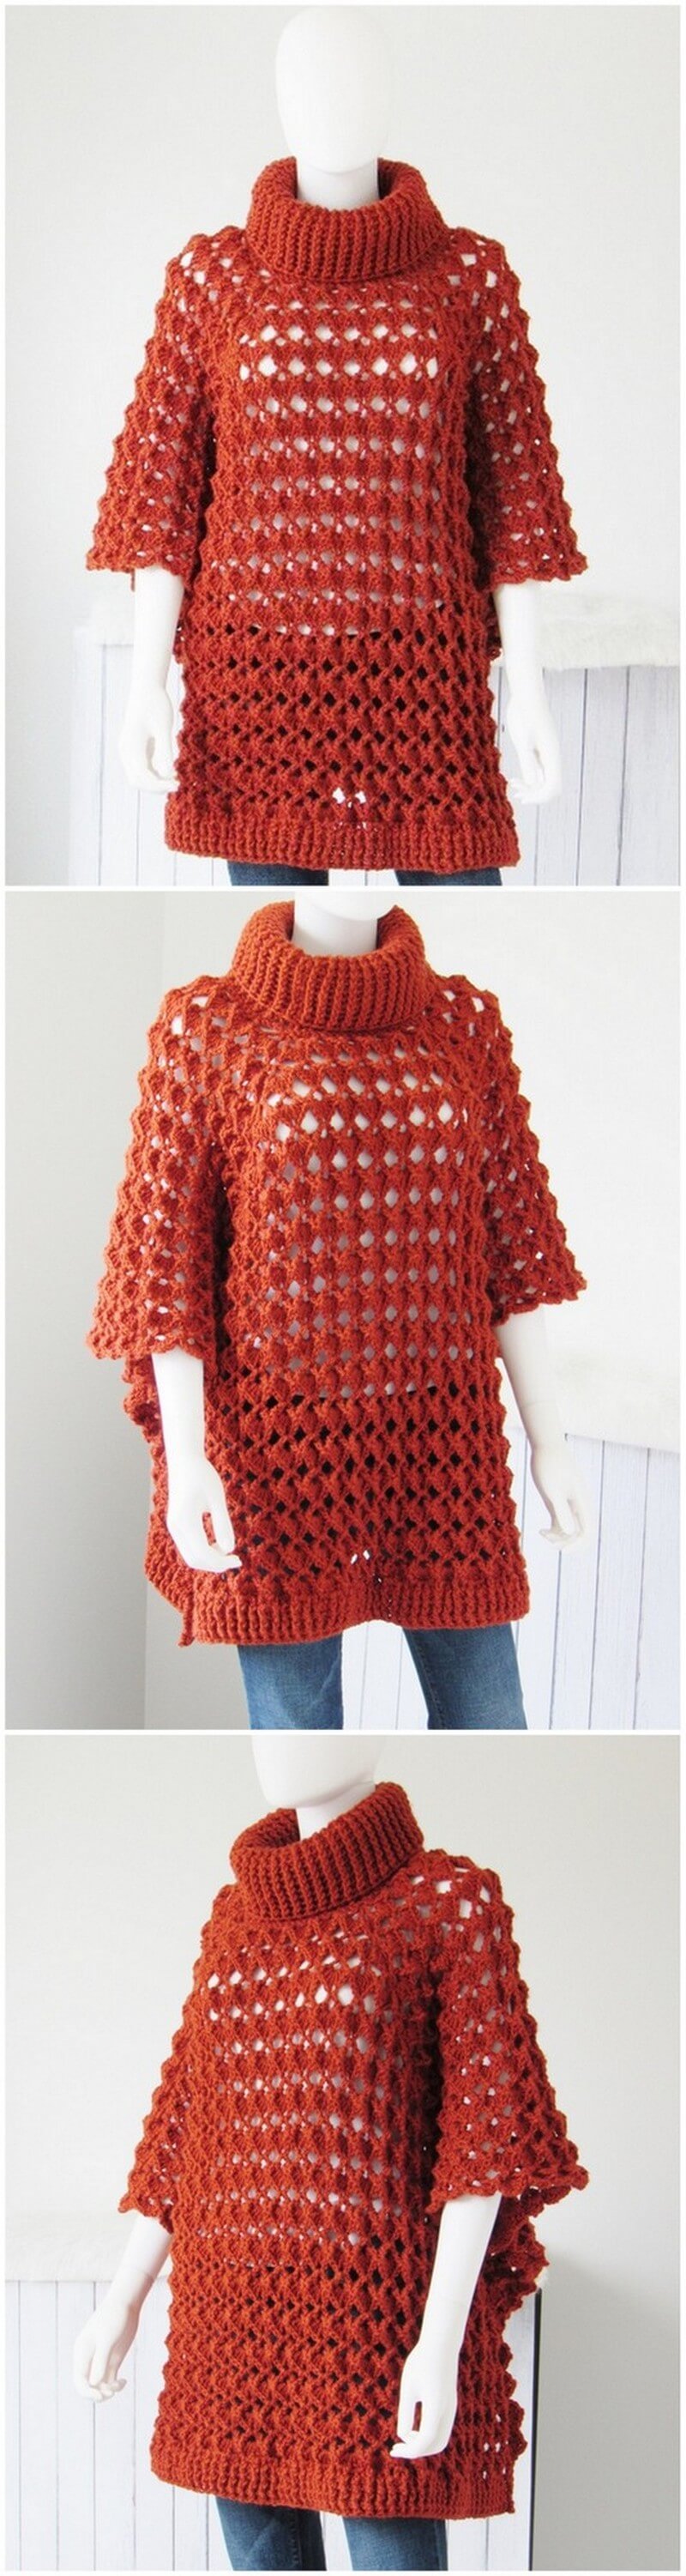 Crochet Poncho Pattern (32)